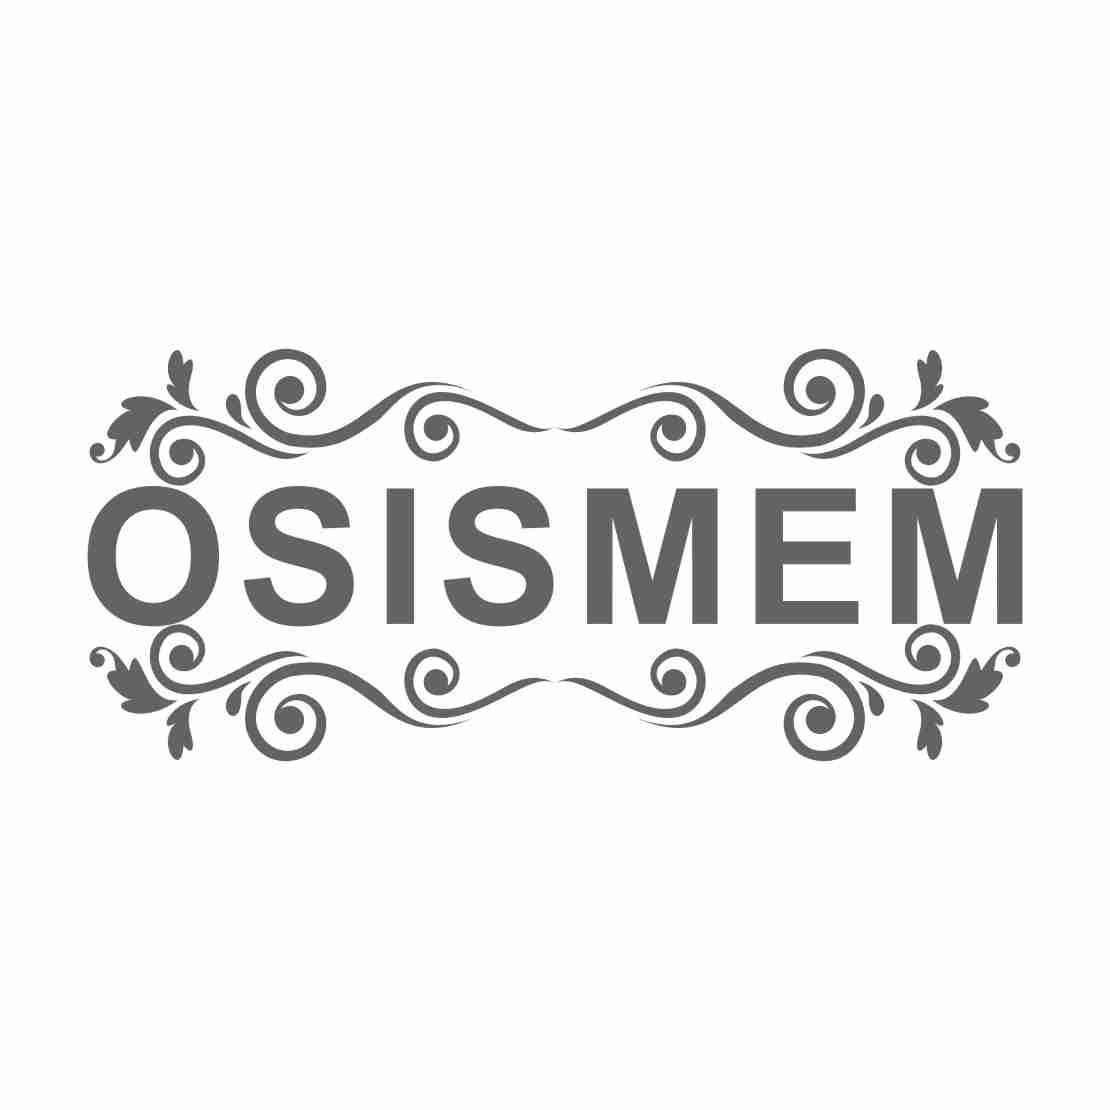 OSISMEM商标转让